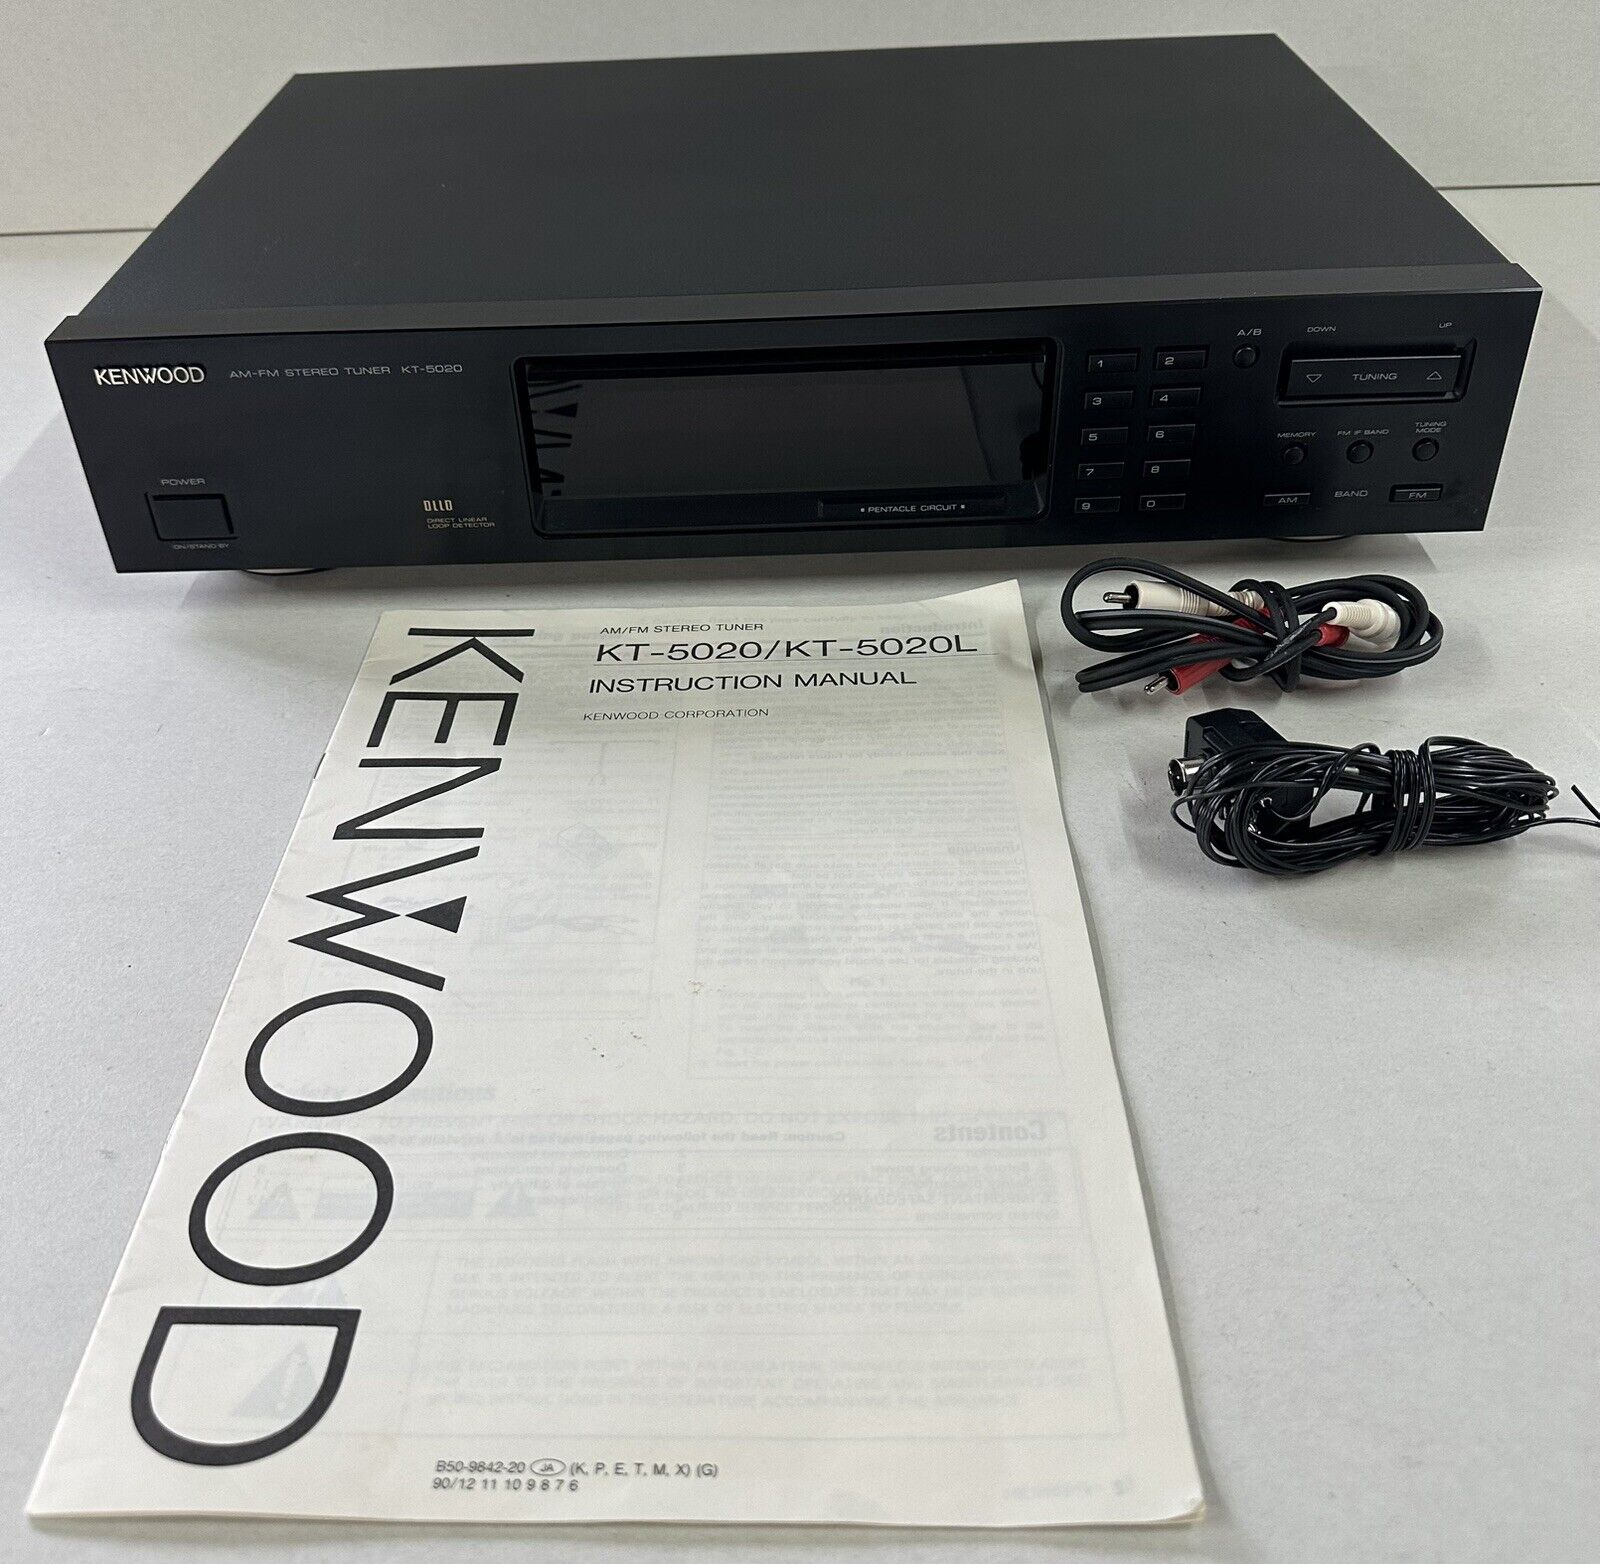 Vintage Kenwood KT-5020 AM/FM Stereo Tuner Excellent Working Condition